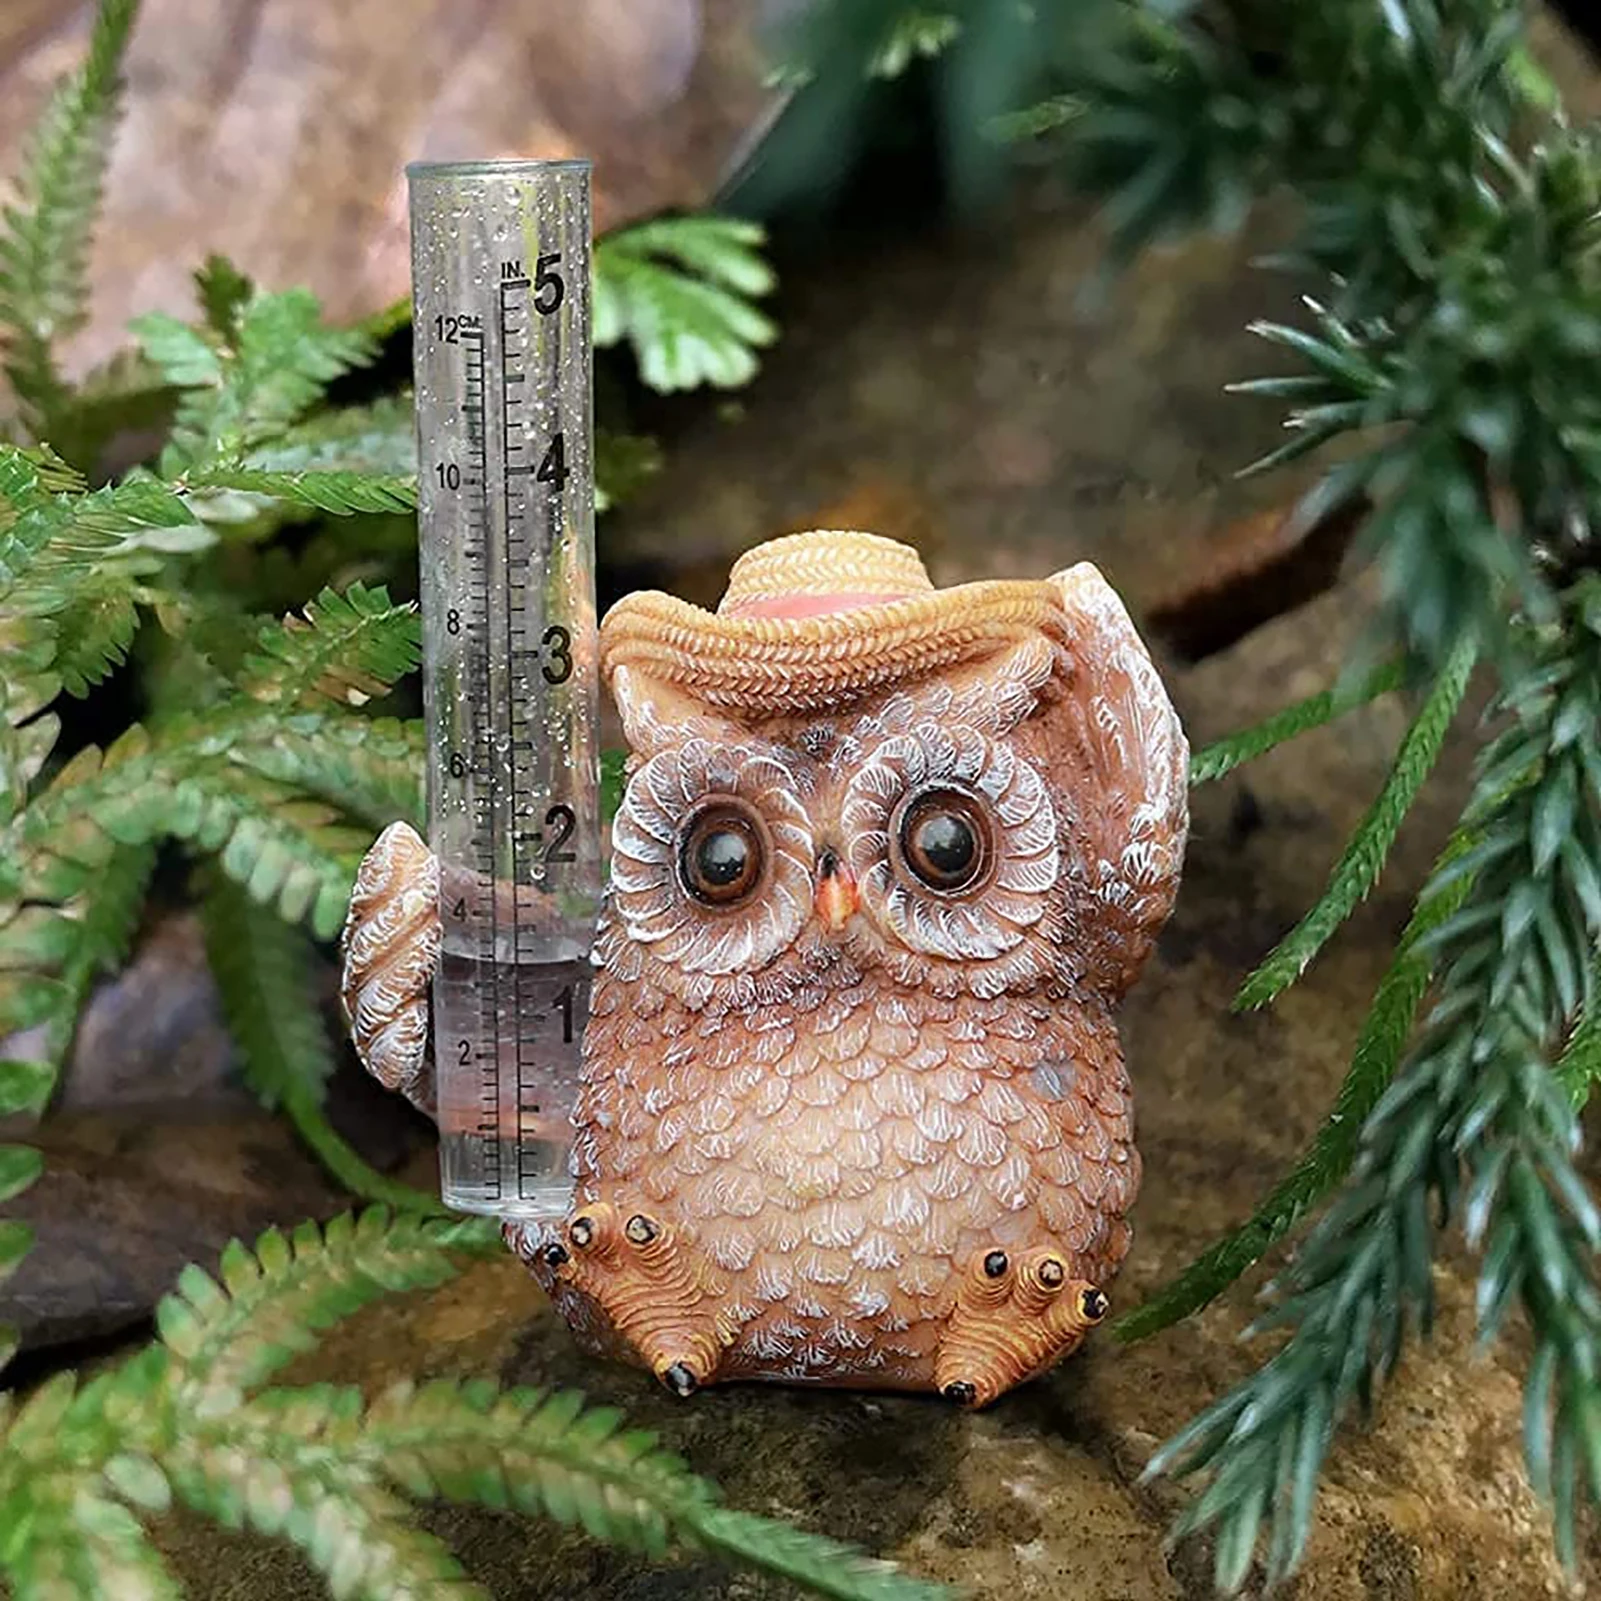 

New Cute Owl Rain Gauge Exquisite Durable Resin Rain Resistant Water Gauge Baby Owl Ornaments Figurines Crafts Decor for Garden